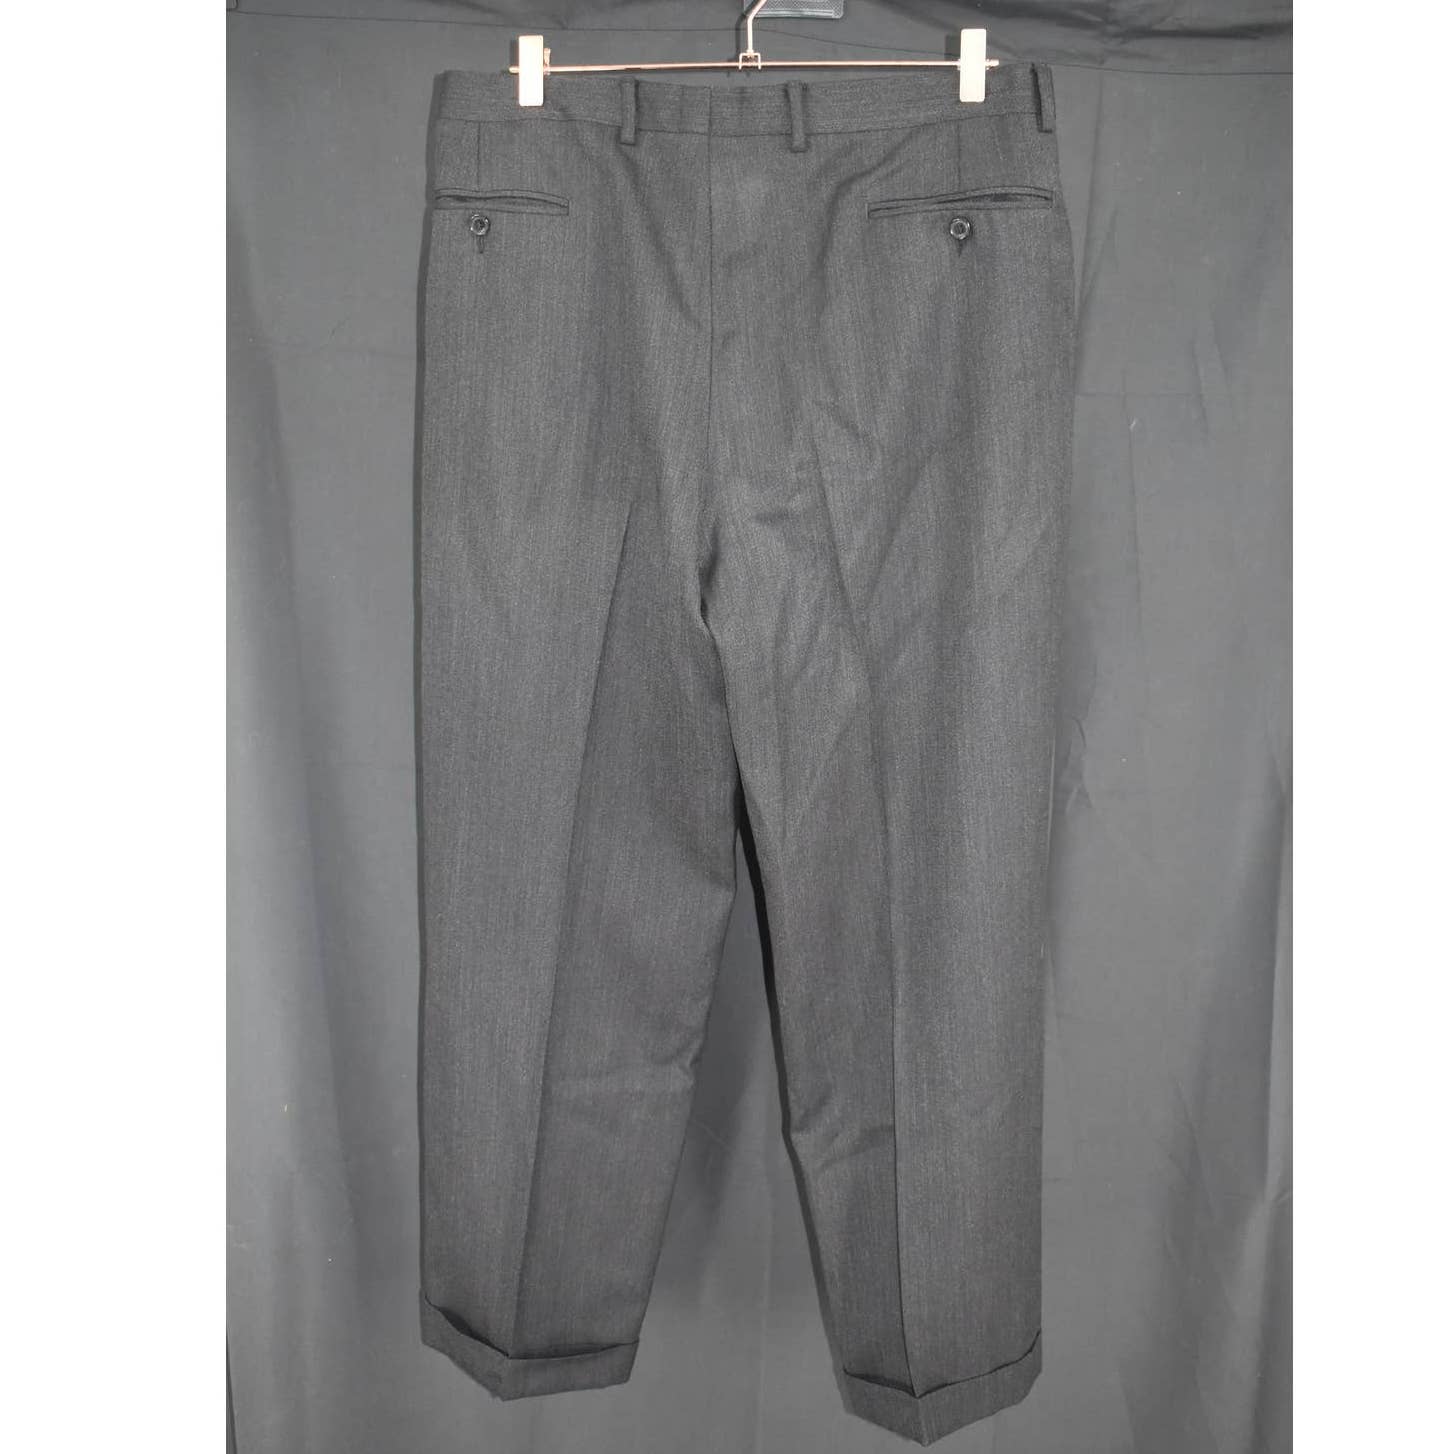 Barney's New York Charcoal Wool Pleated Dress Pants - 34